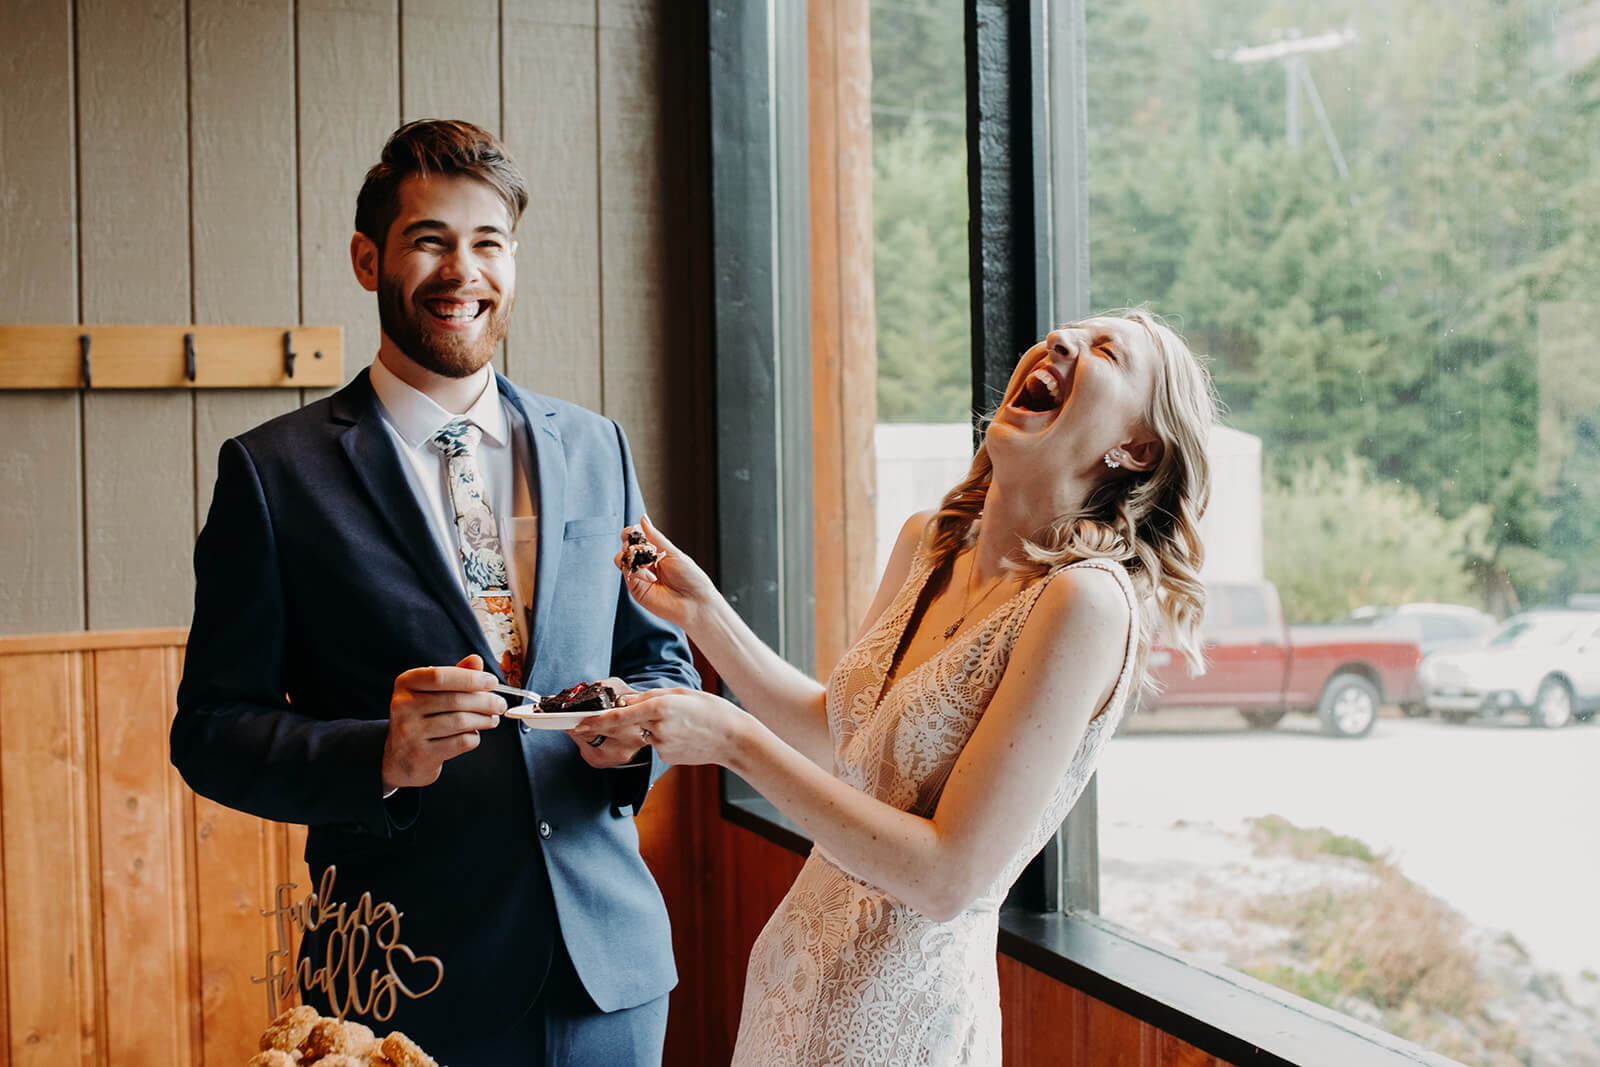 Bride and groom laugh during cake cutting at ski wedding